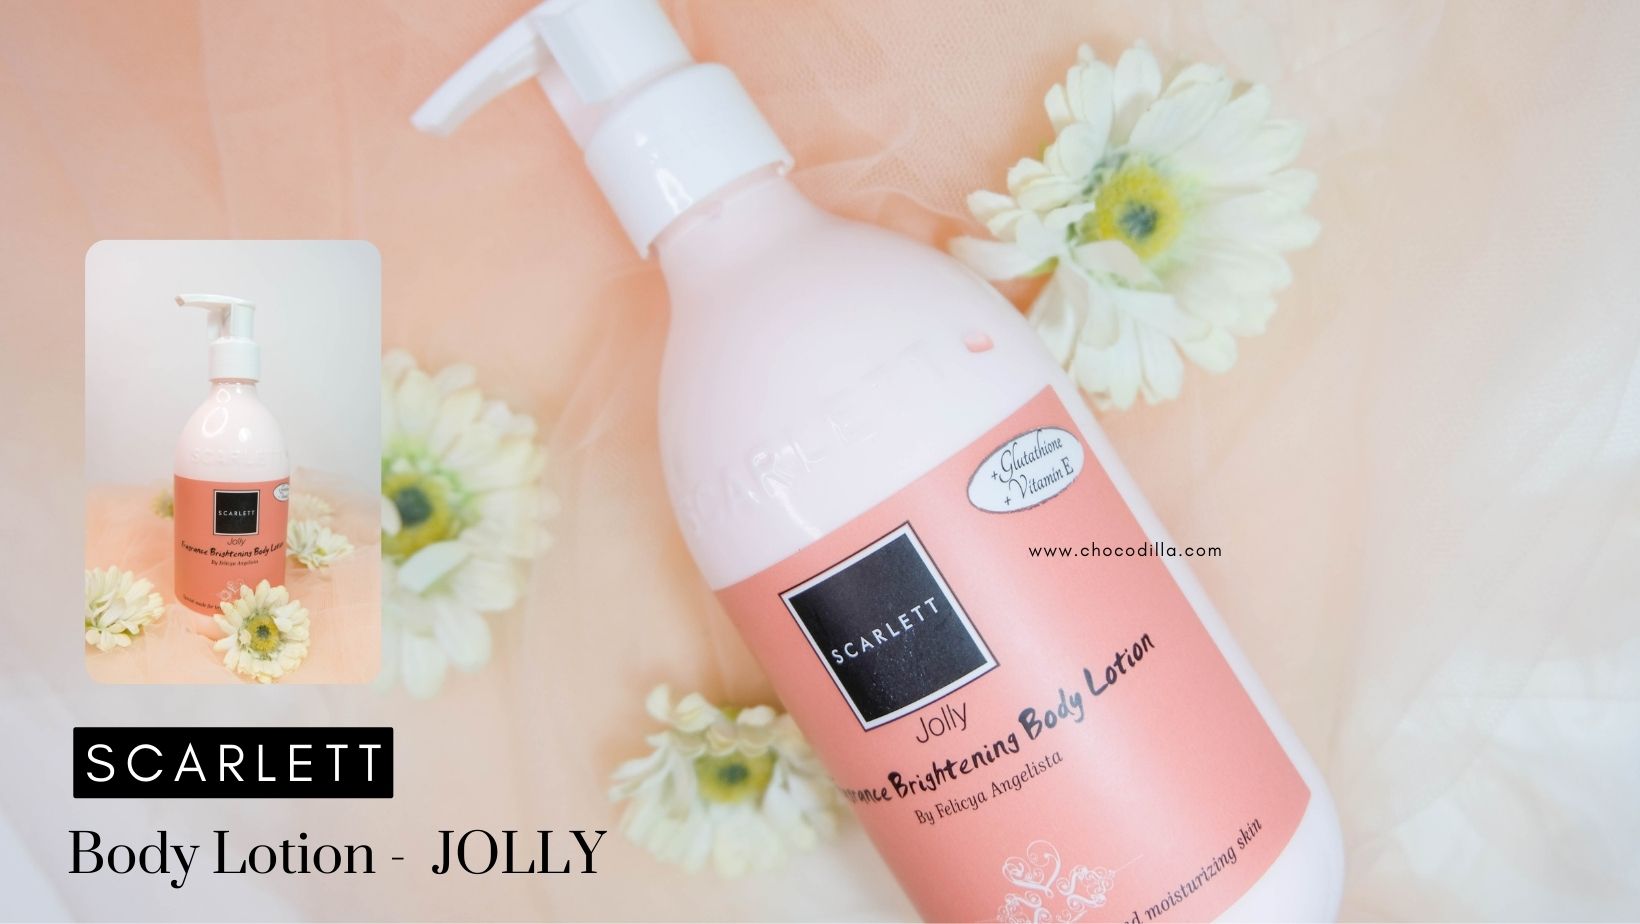 [Review] Scarlett Body Lotion, Body Serum & Body Cream varian Jolly